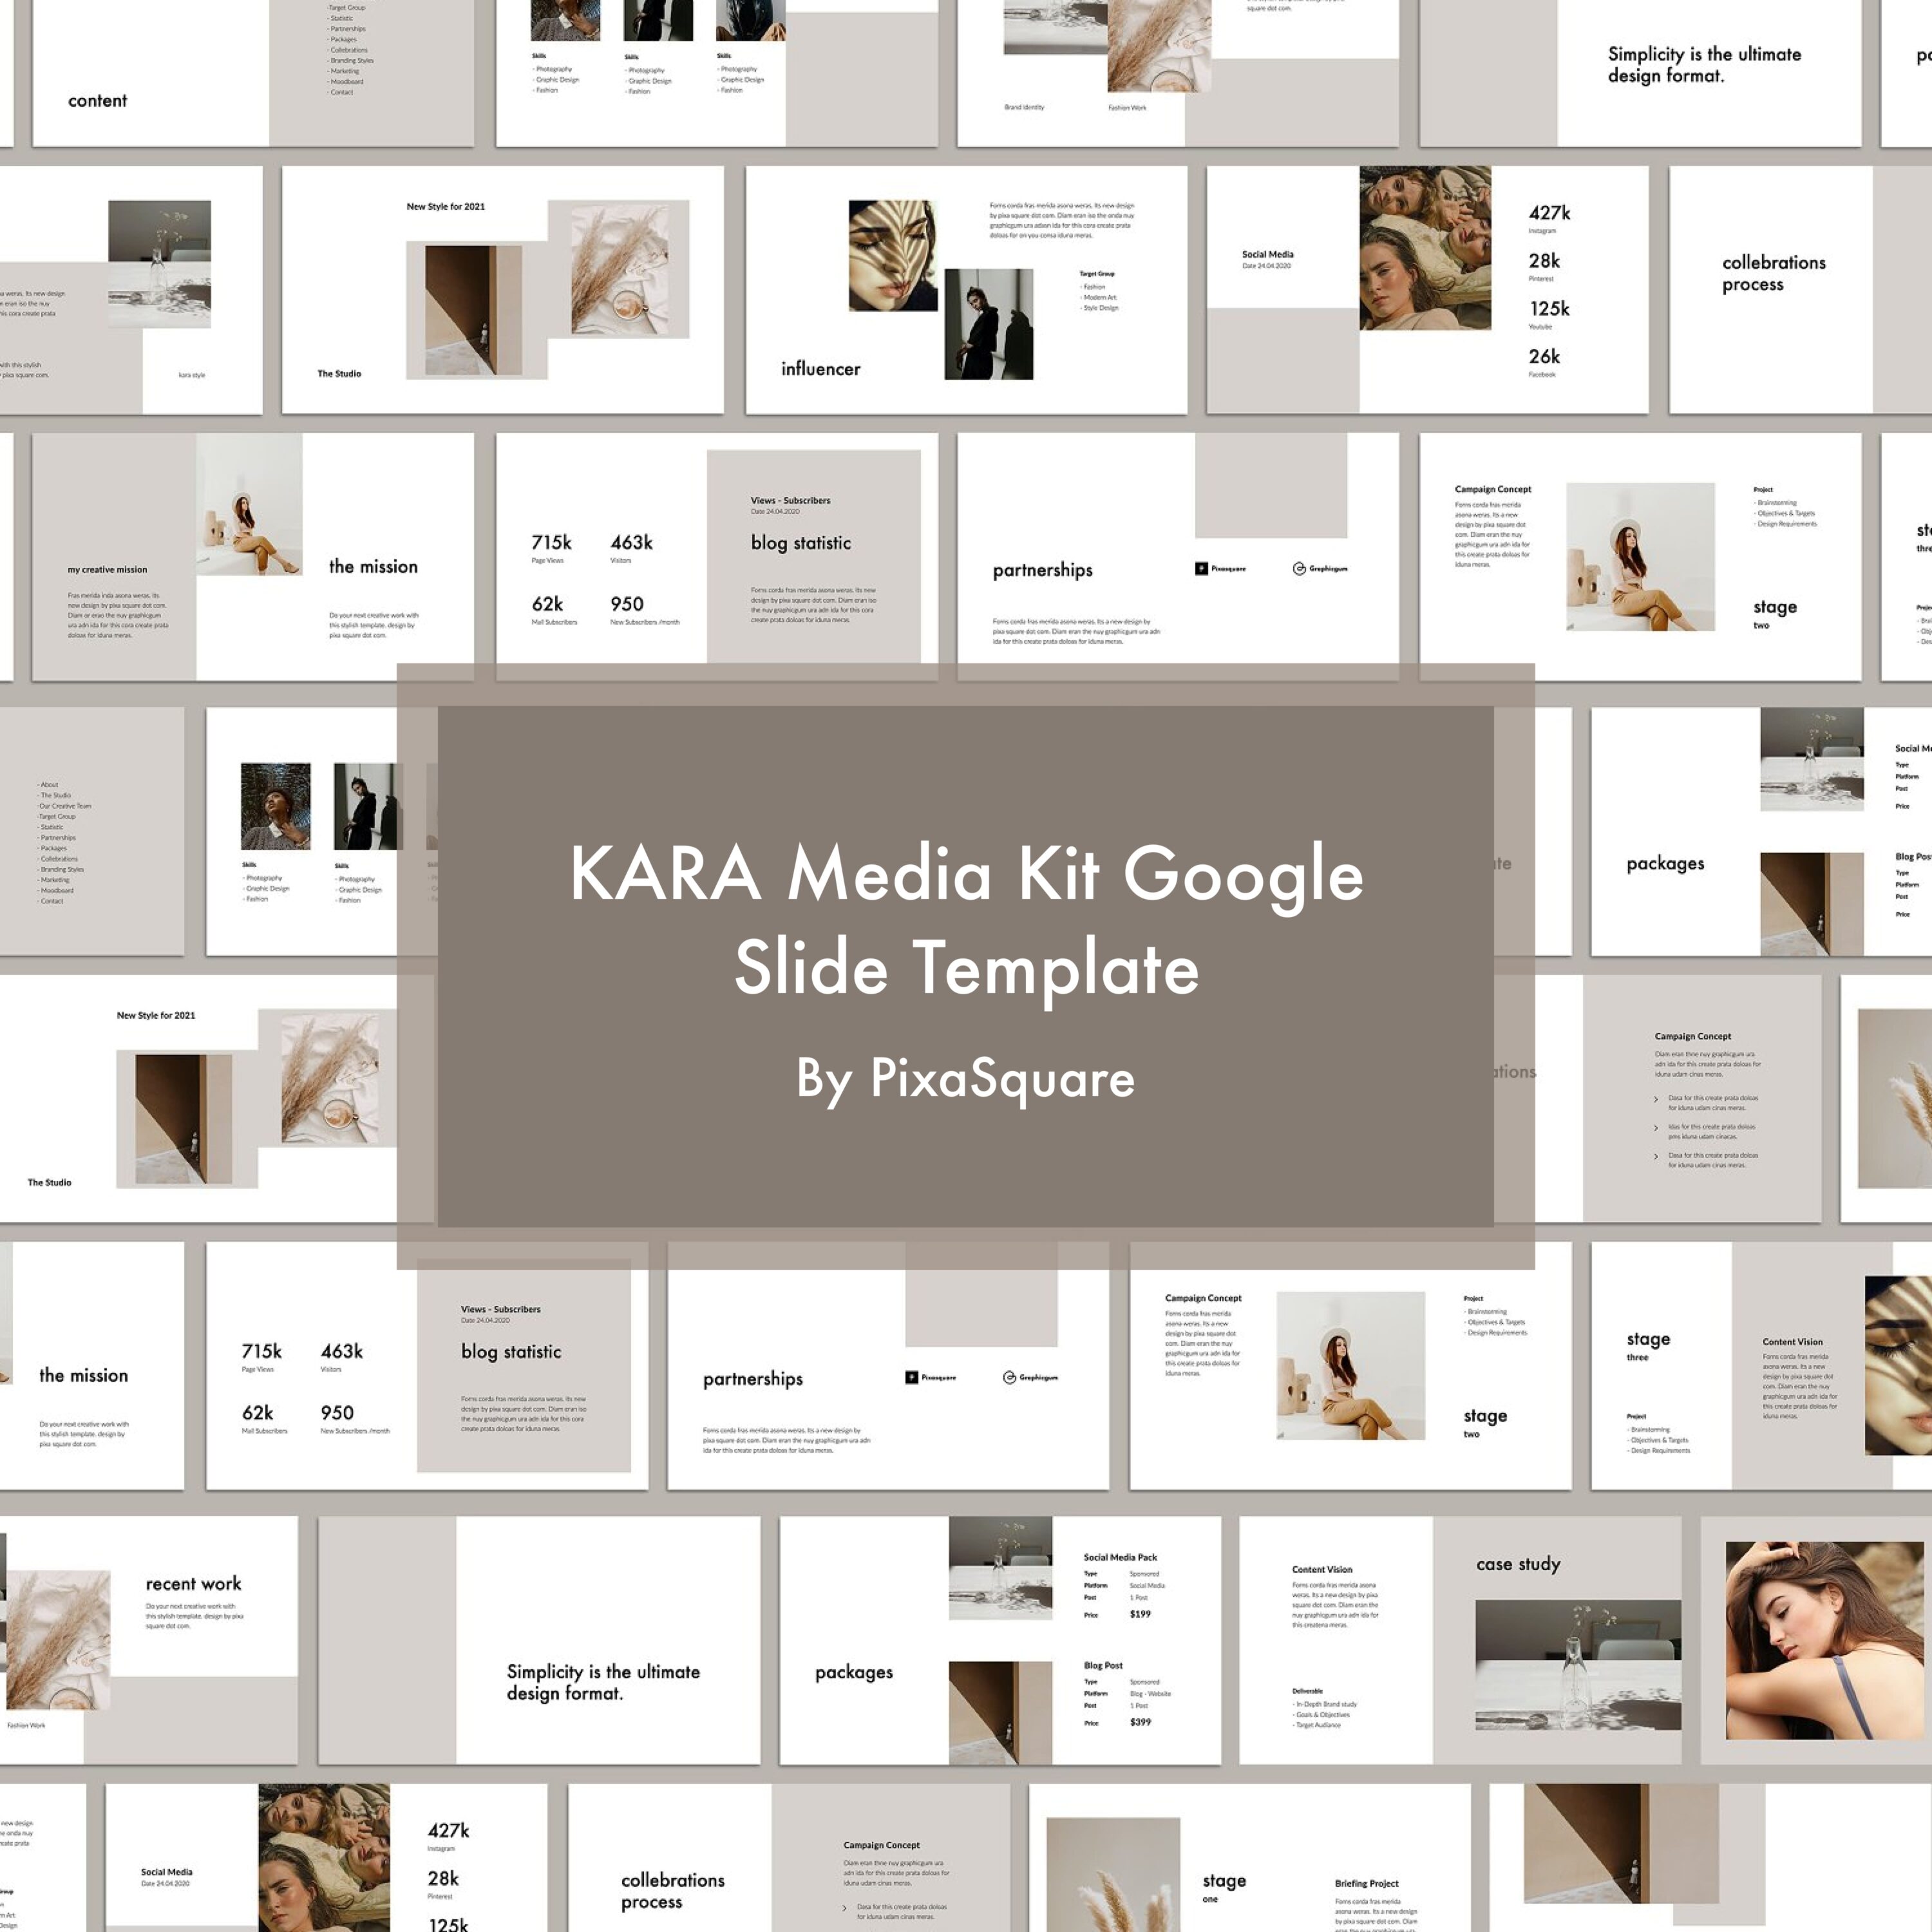 KARA Media Kit Google Slide Template.